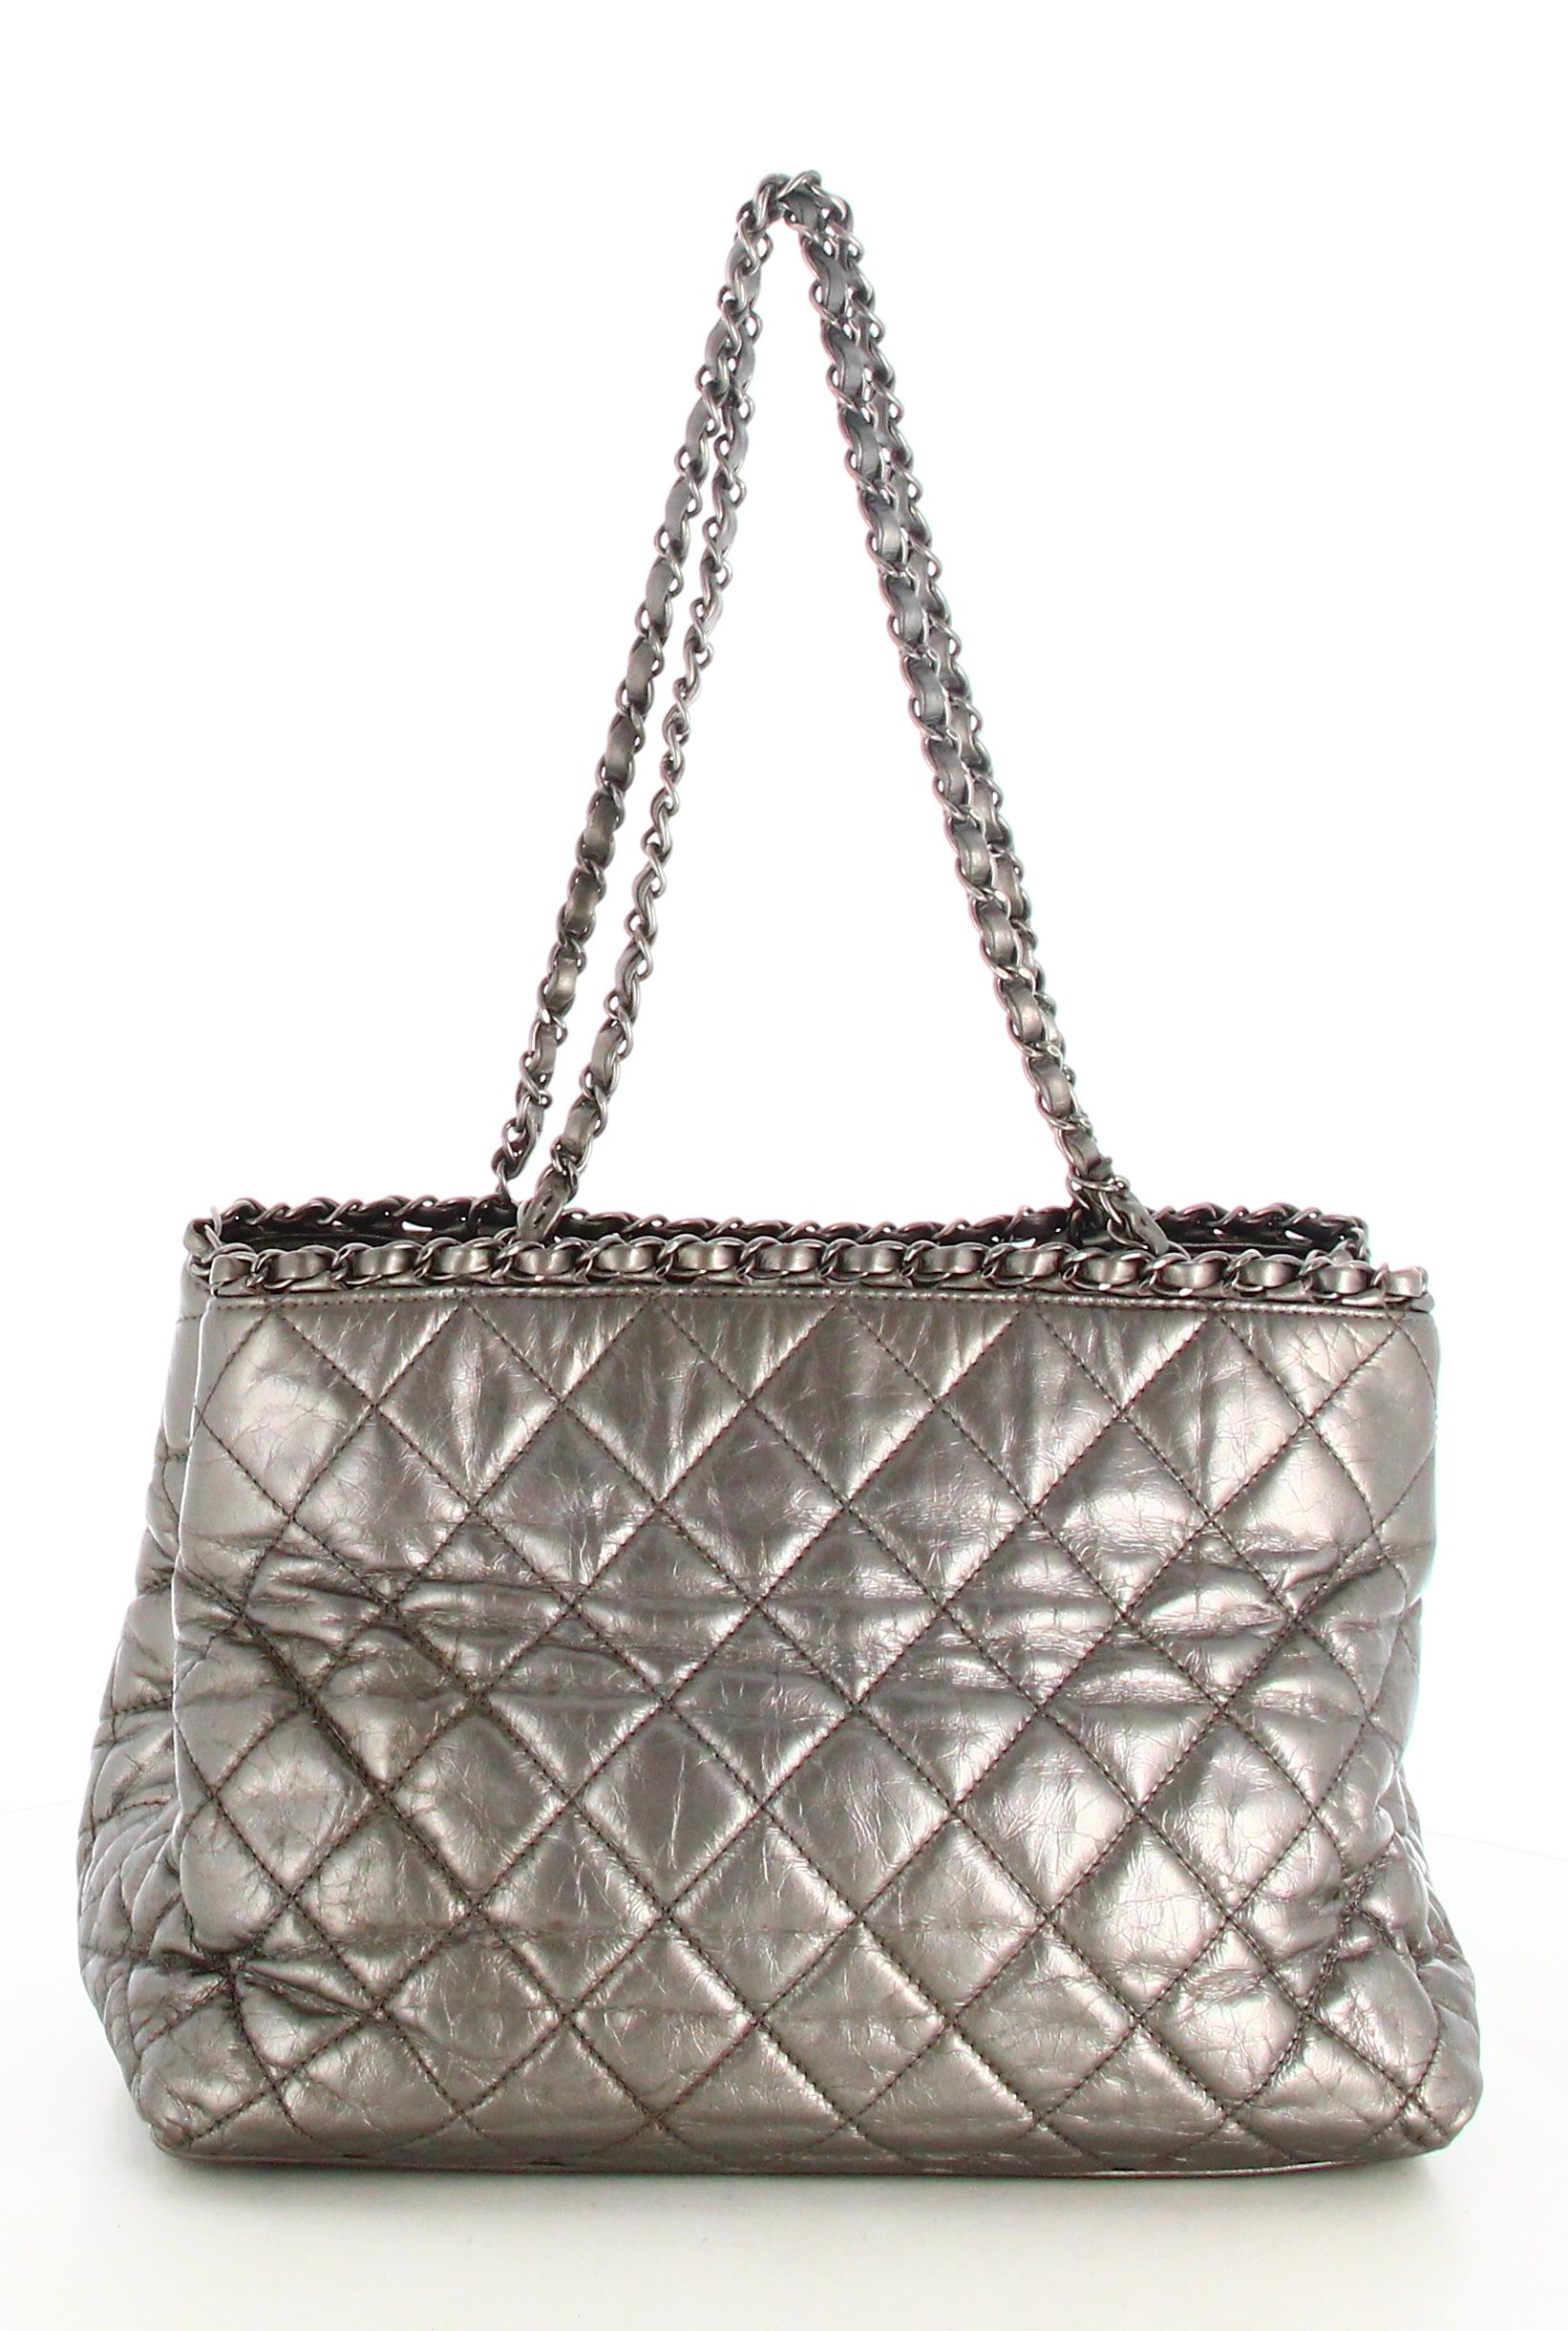 2012 Chanel Chain Me Tote Handbag Grey For Sale 2